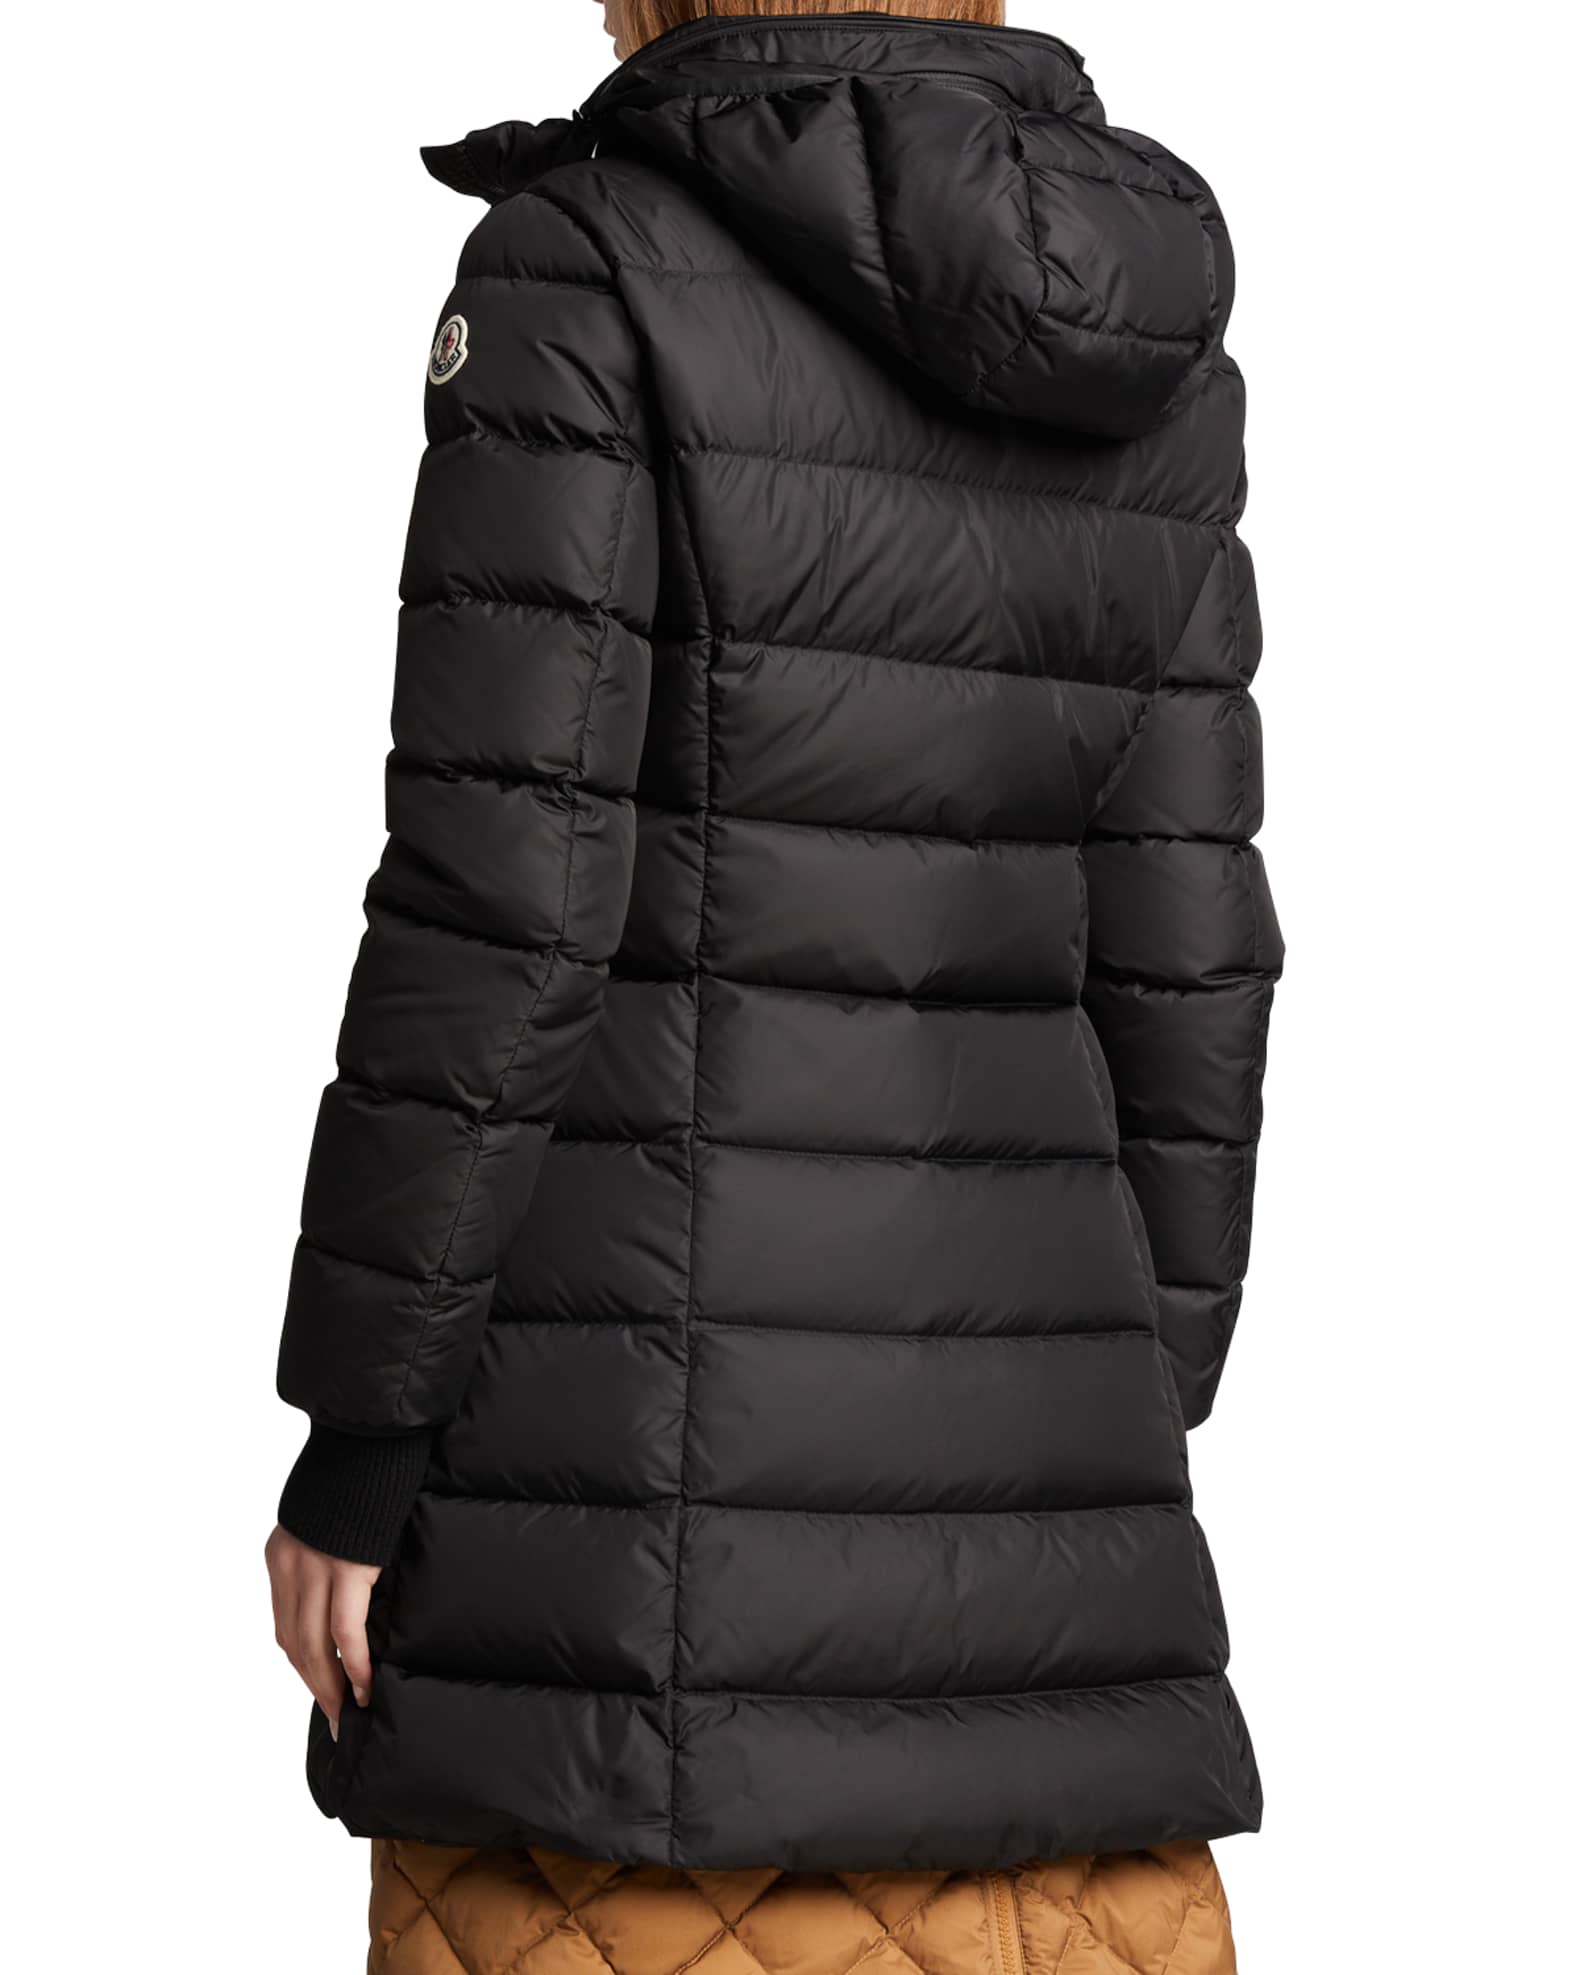 Moncler Gie Long Puffer Jacket | Neiman Marcus